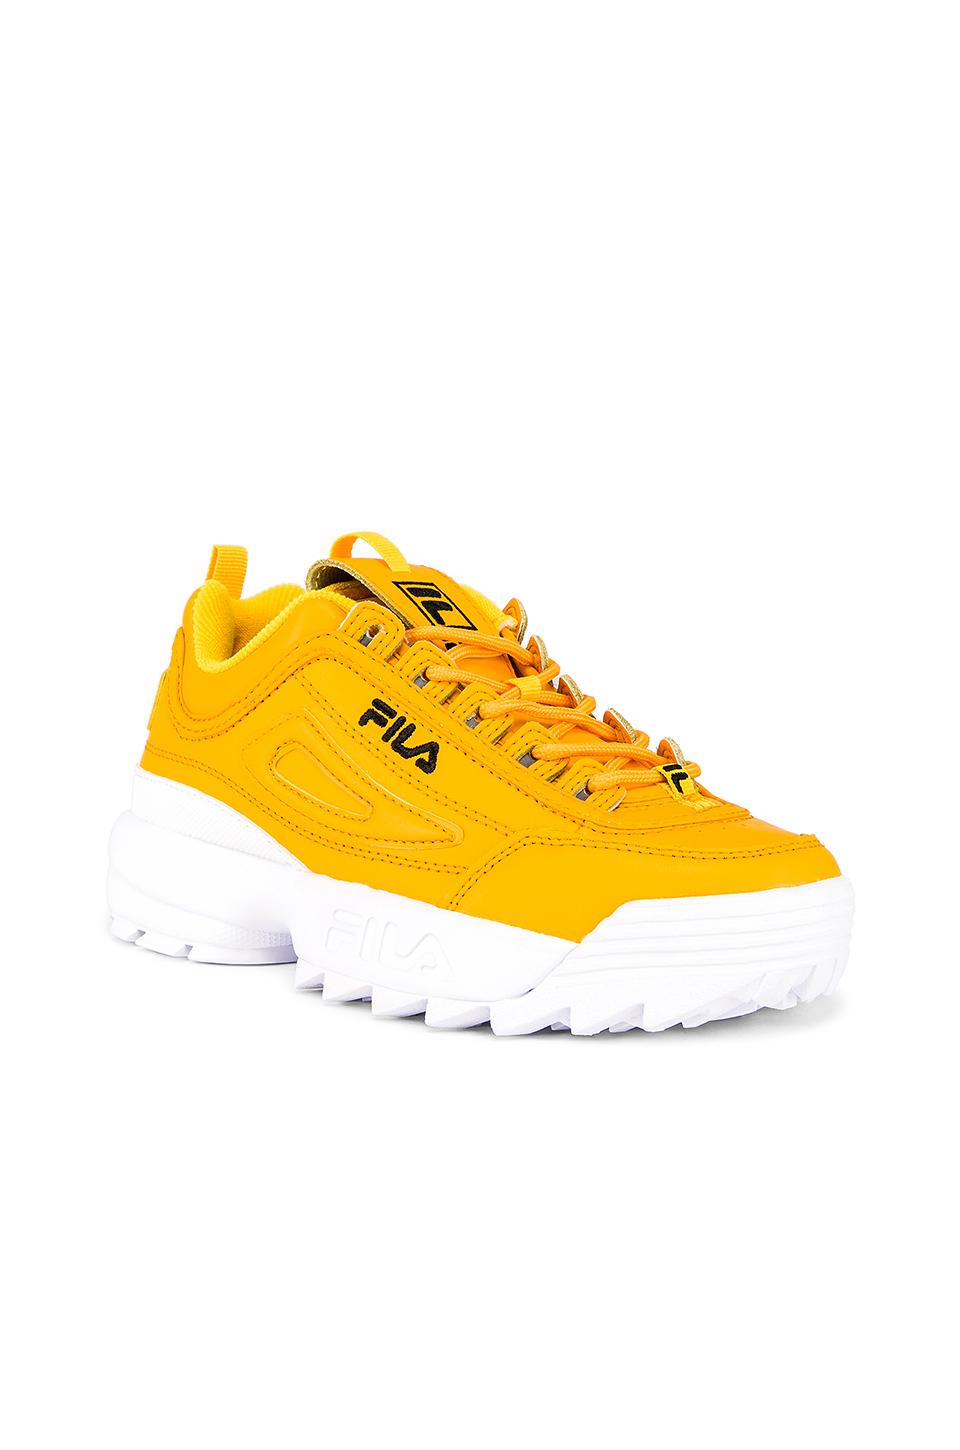 Fila Disruptor Ii Premium Sneaker in Gold Black & White (Yellow) | Lyst